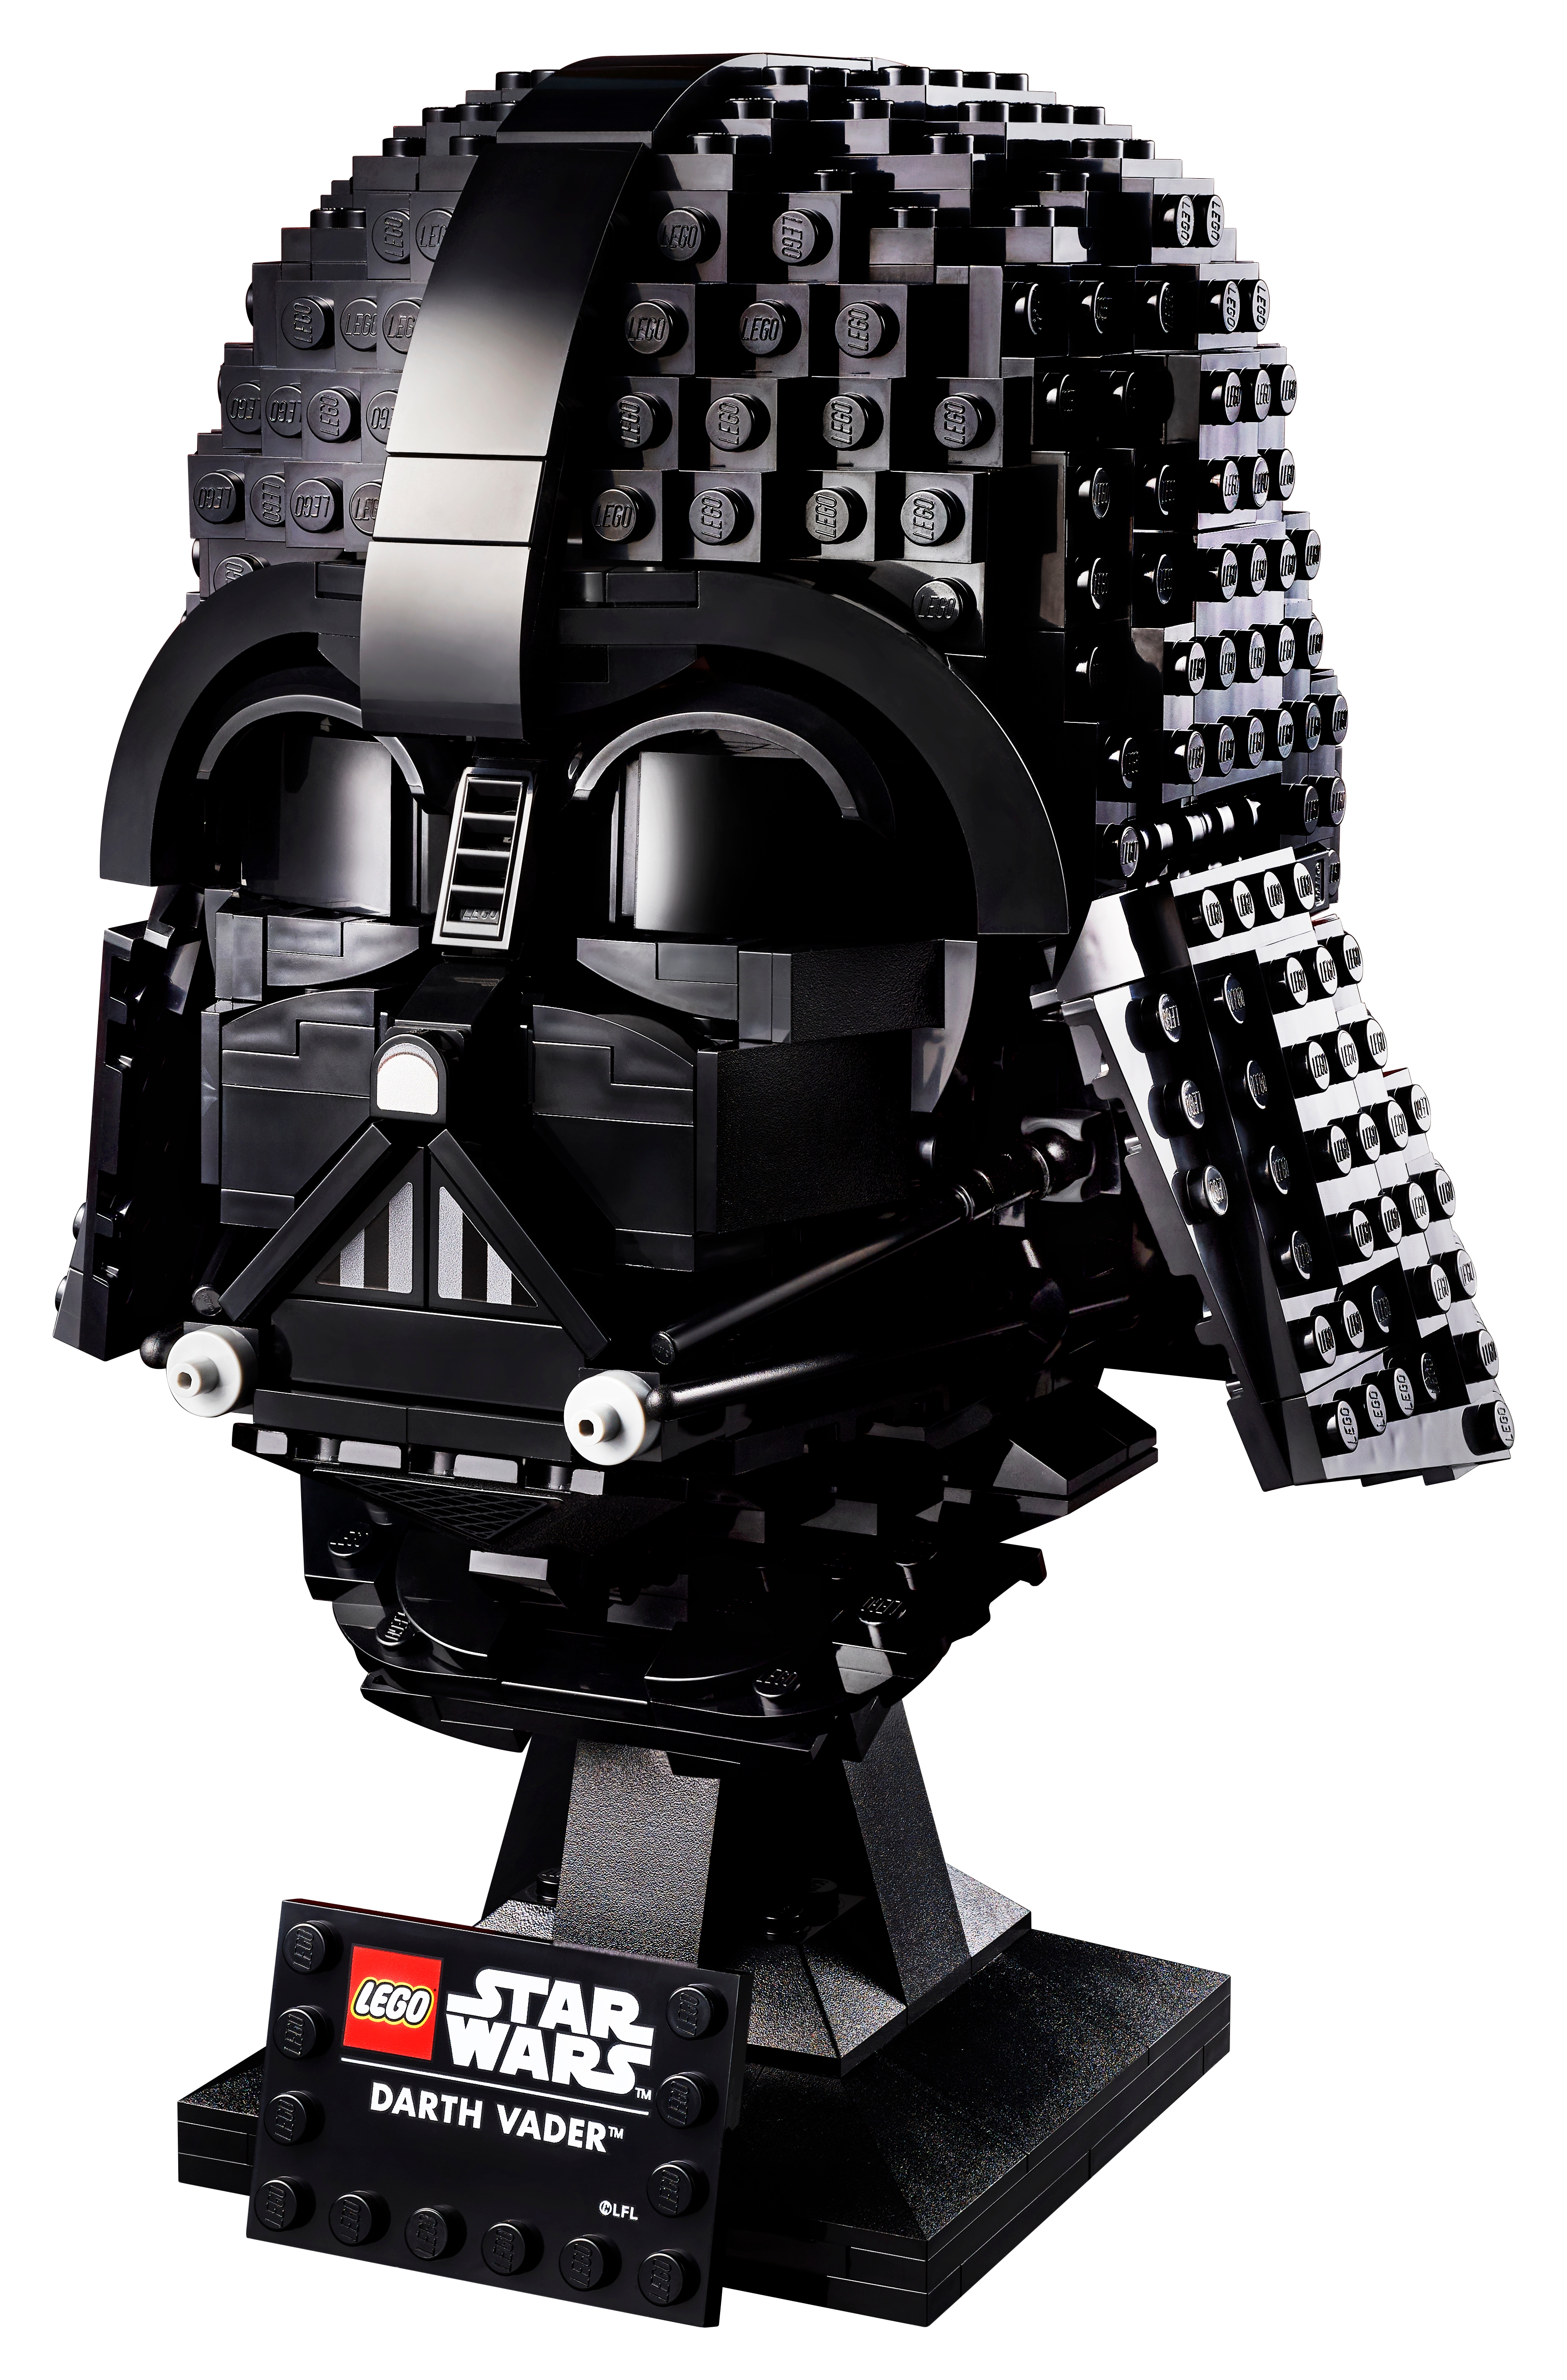 Darth Vader Helmet 75304 LMTIC Led Lighting Kit for NOT Included The Lego Sets Building Blocks Model-Light Kit for Lego Helmet Darth Vader Helmet 75304 Light Set Compatible with Lego 75304 